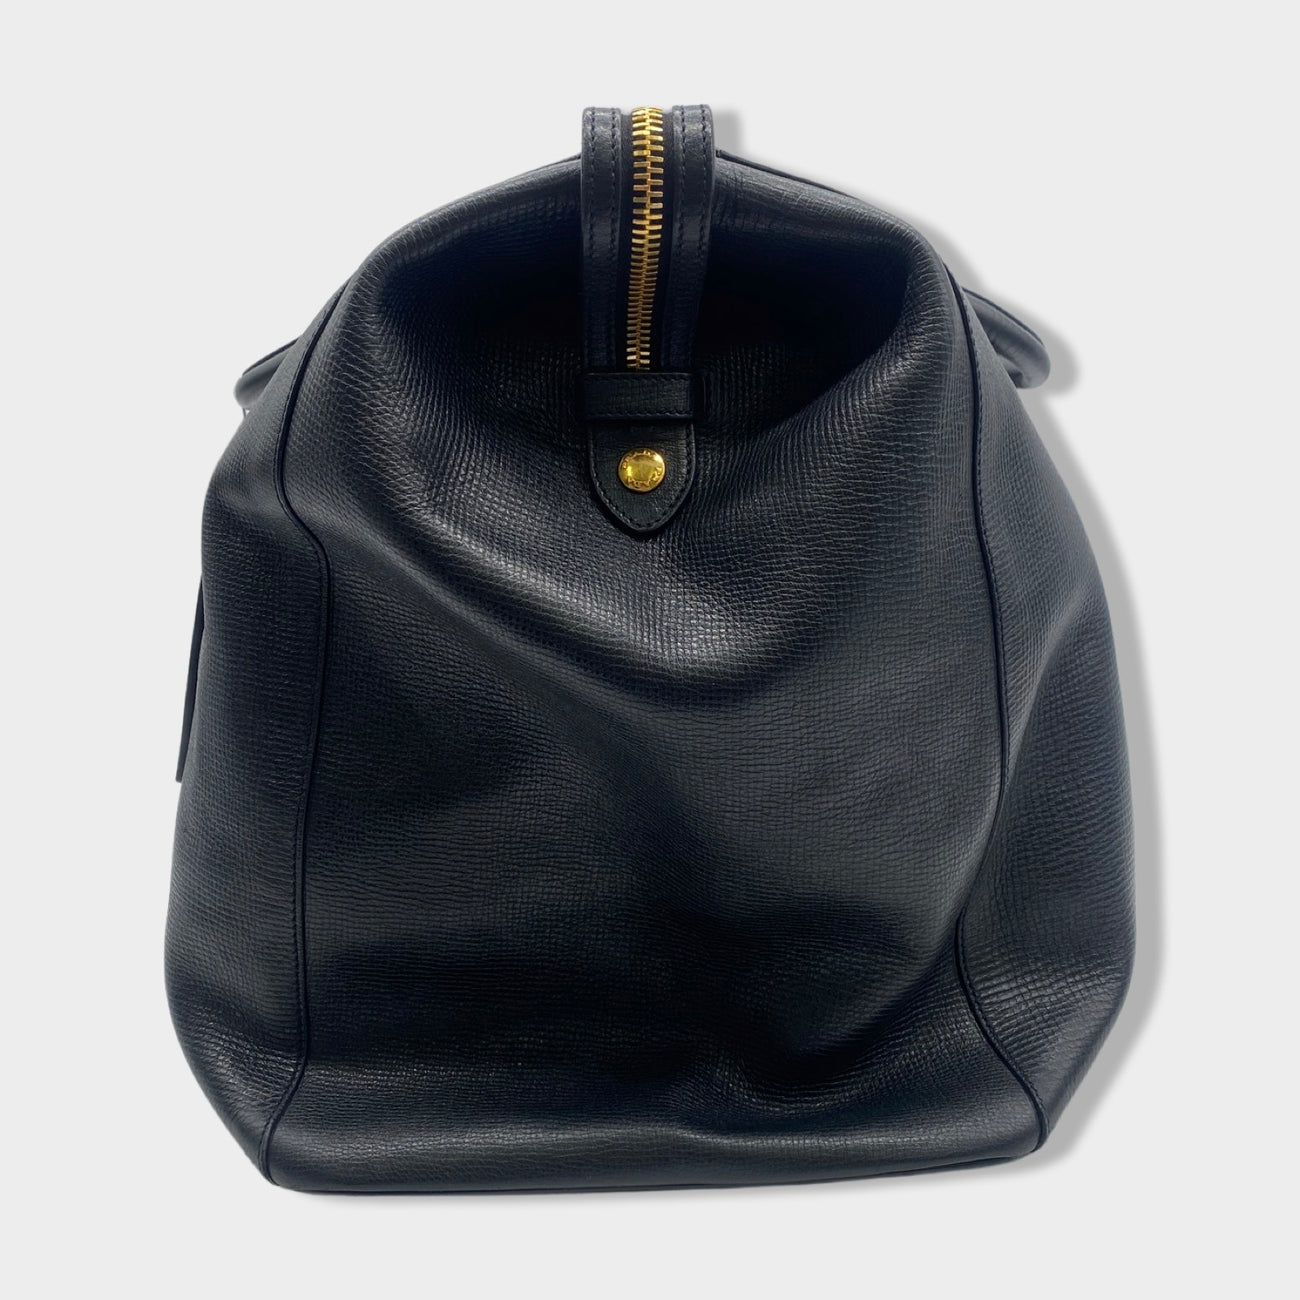 PRADA black leather travel bag with gold hardware – Loop Generation